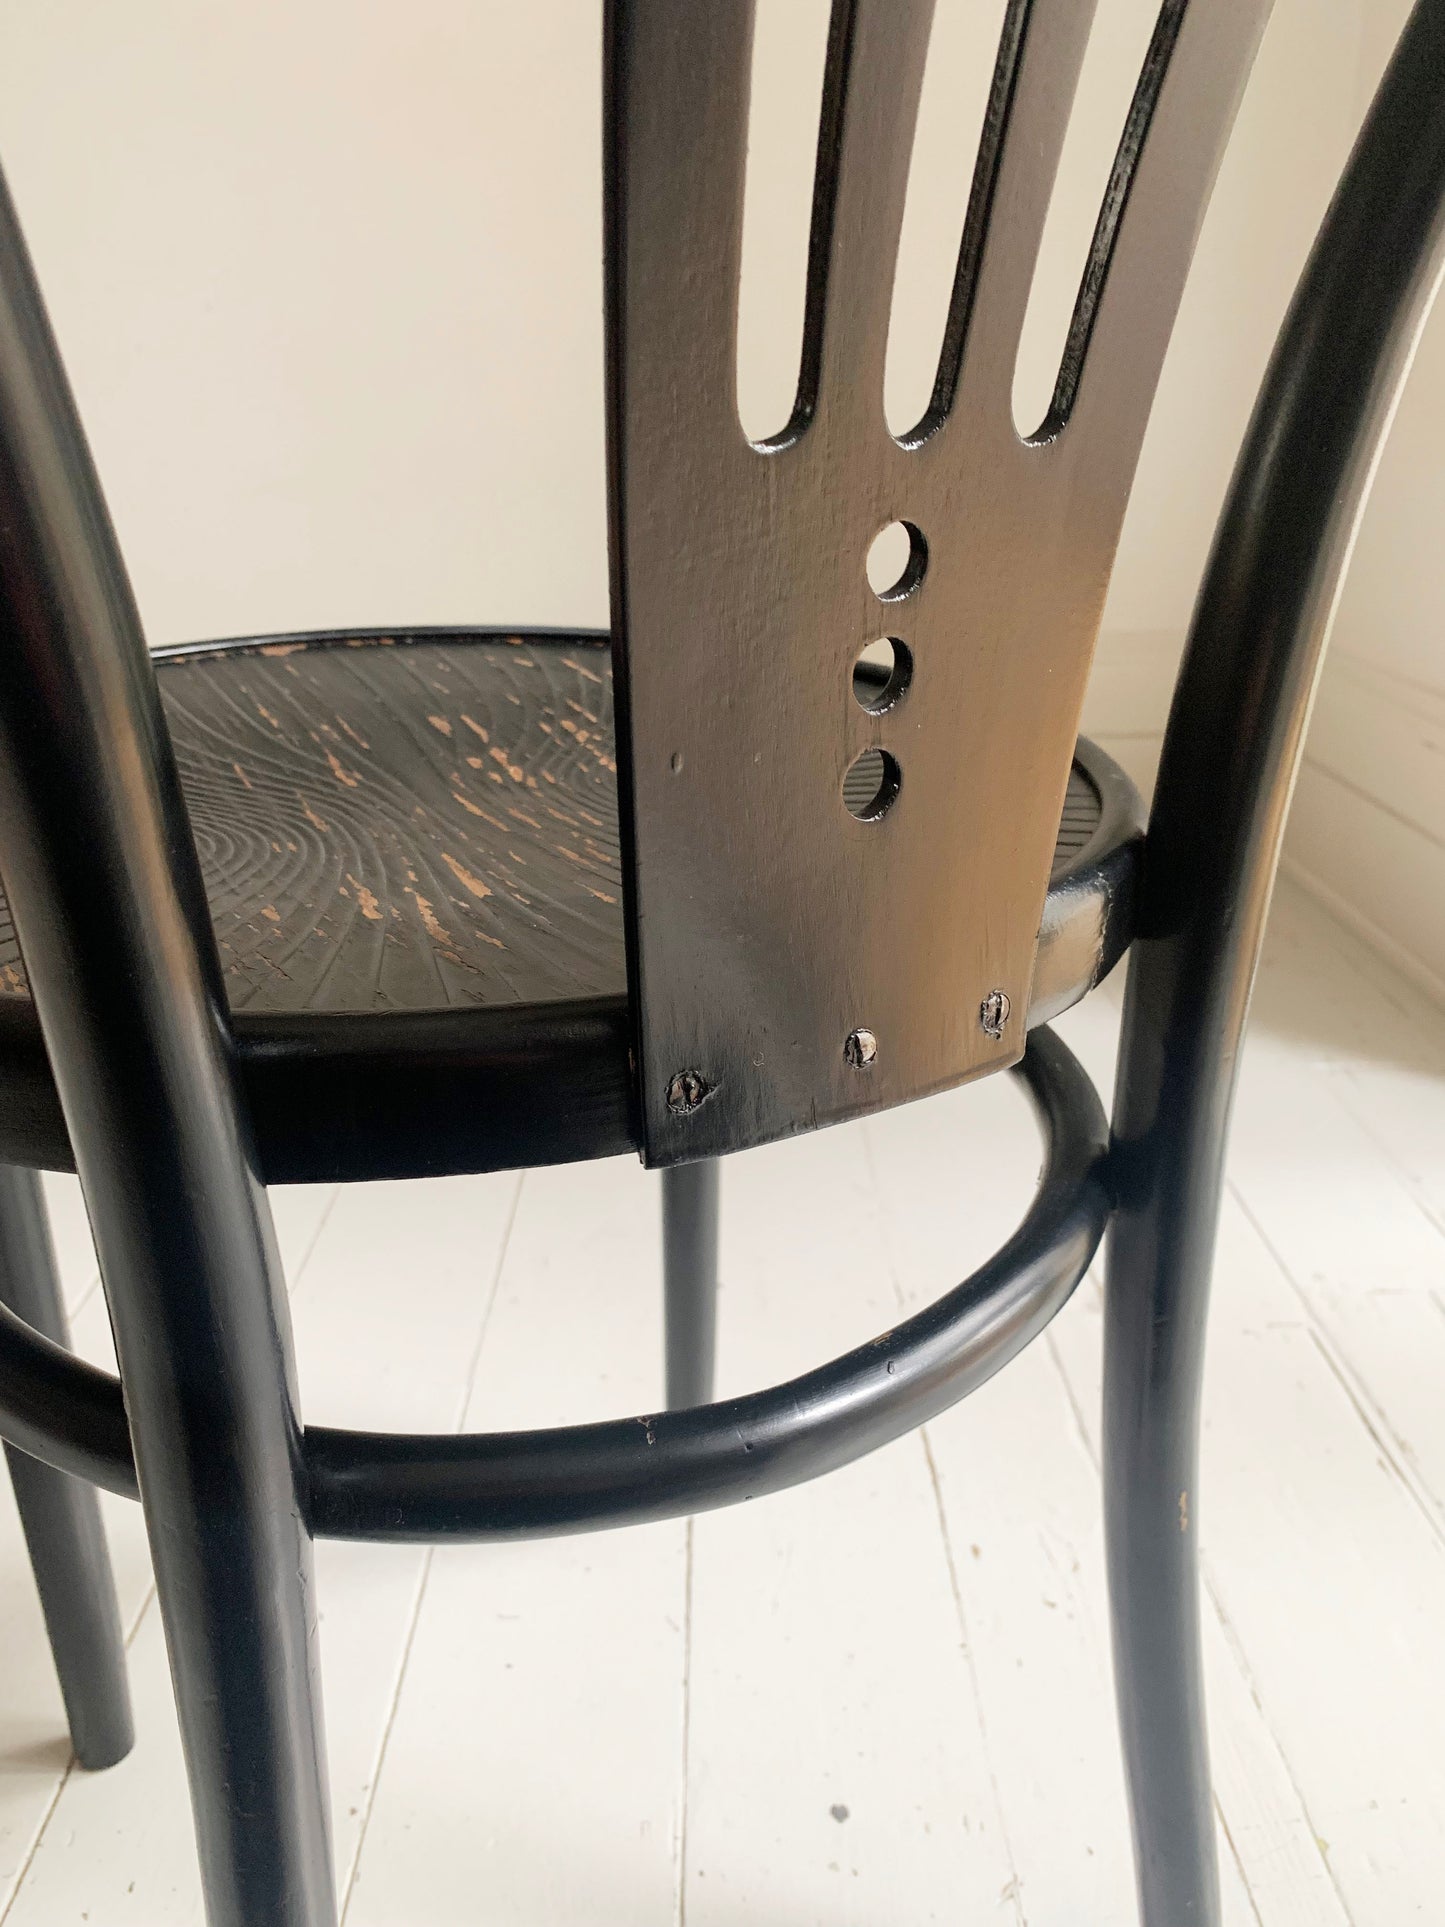 2 x Black Bentwood 1960s ZPM Radomsko Cafe / Dining Chairs - Thonet Style